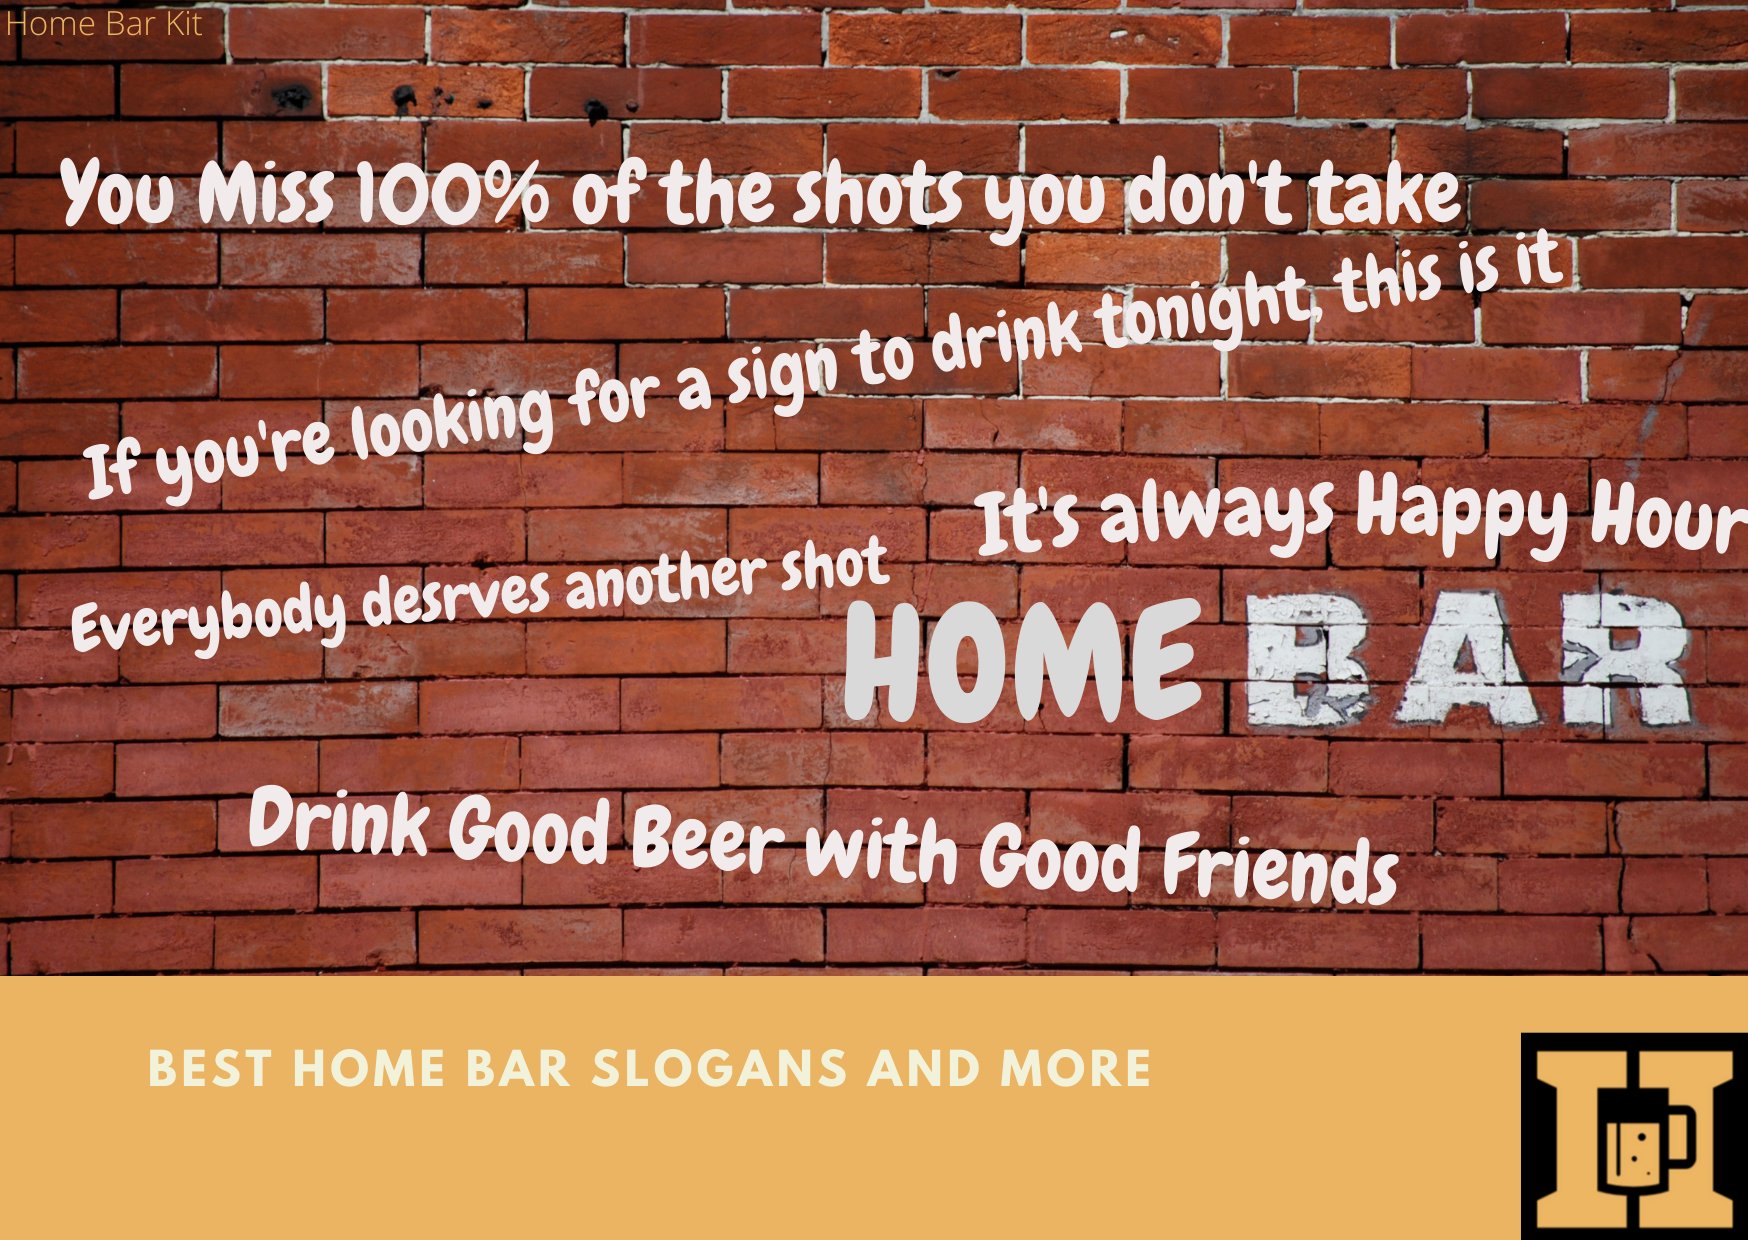 Home Bar Slogans